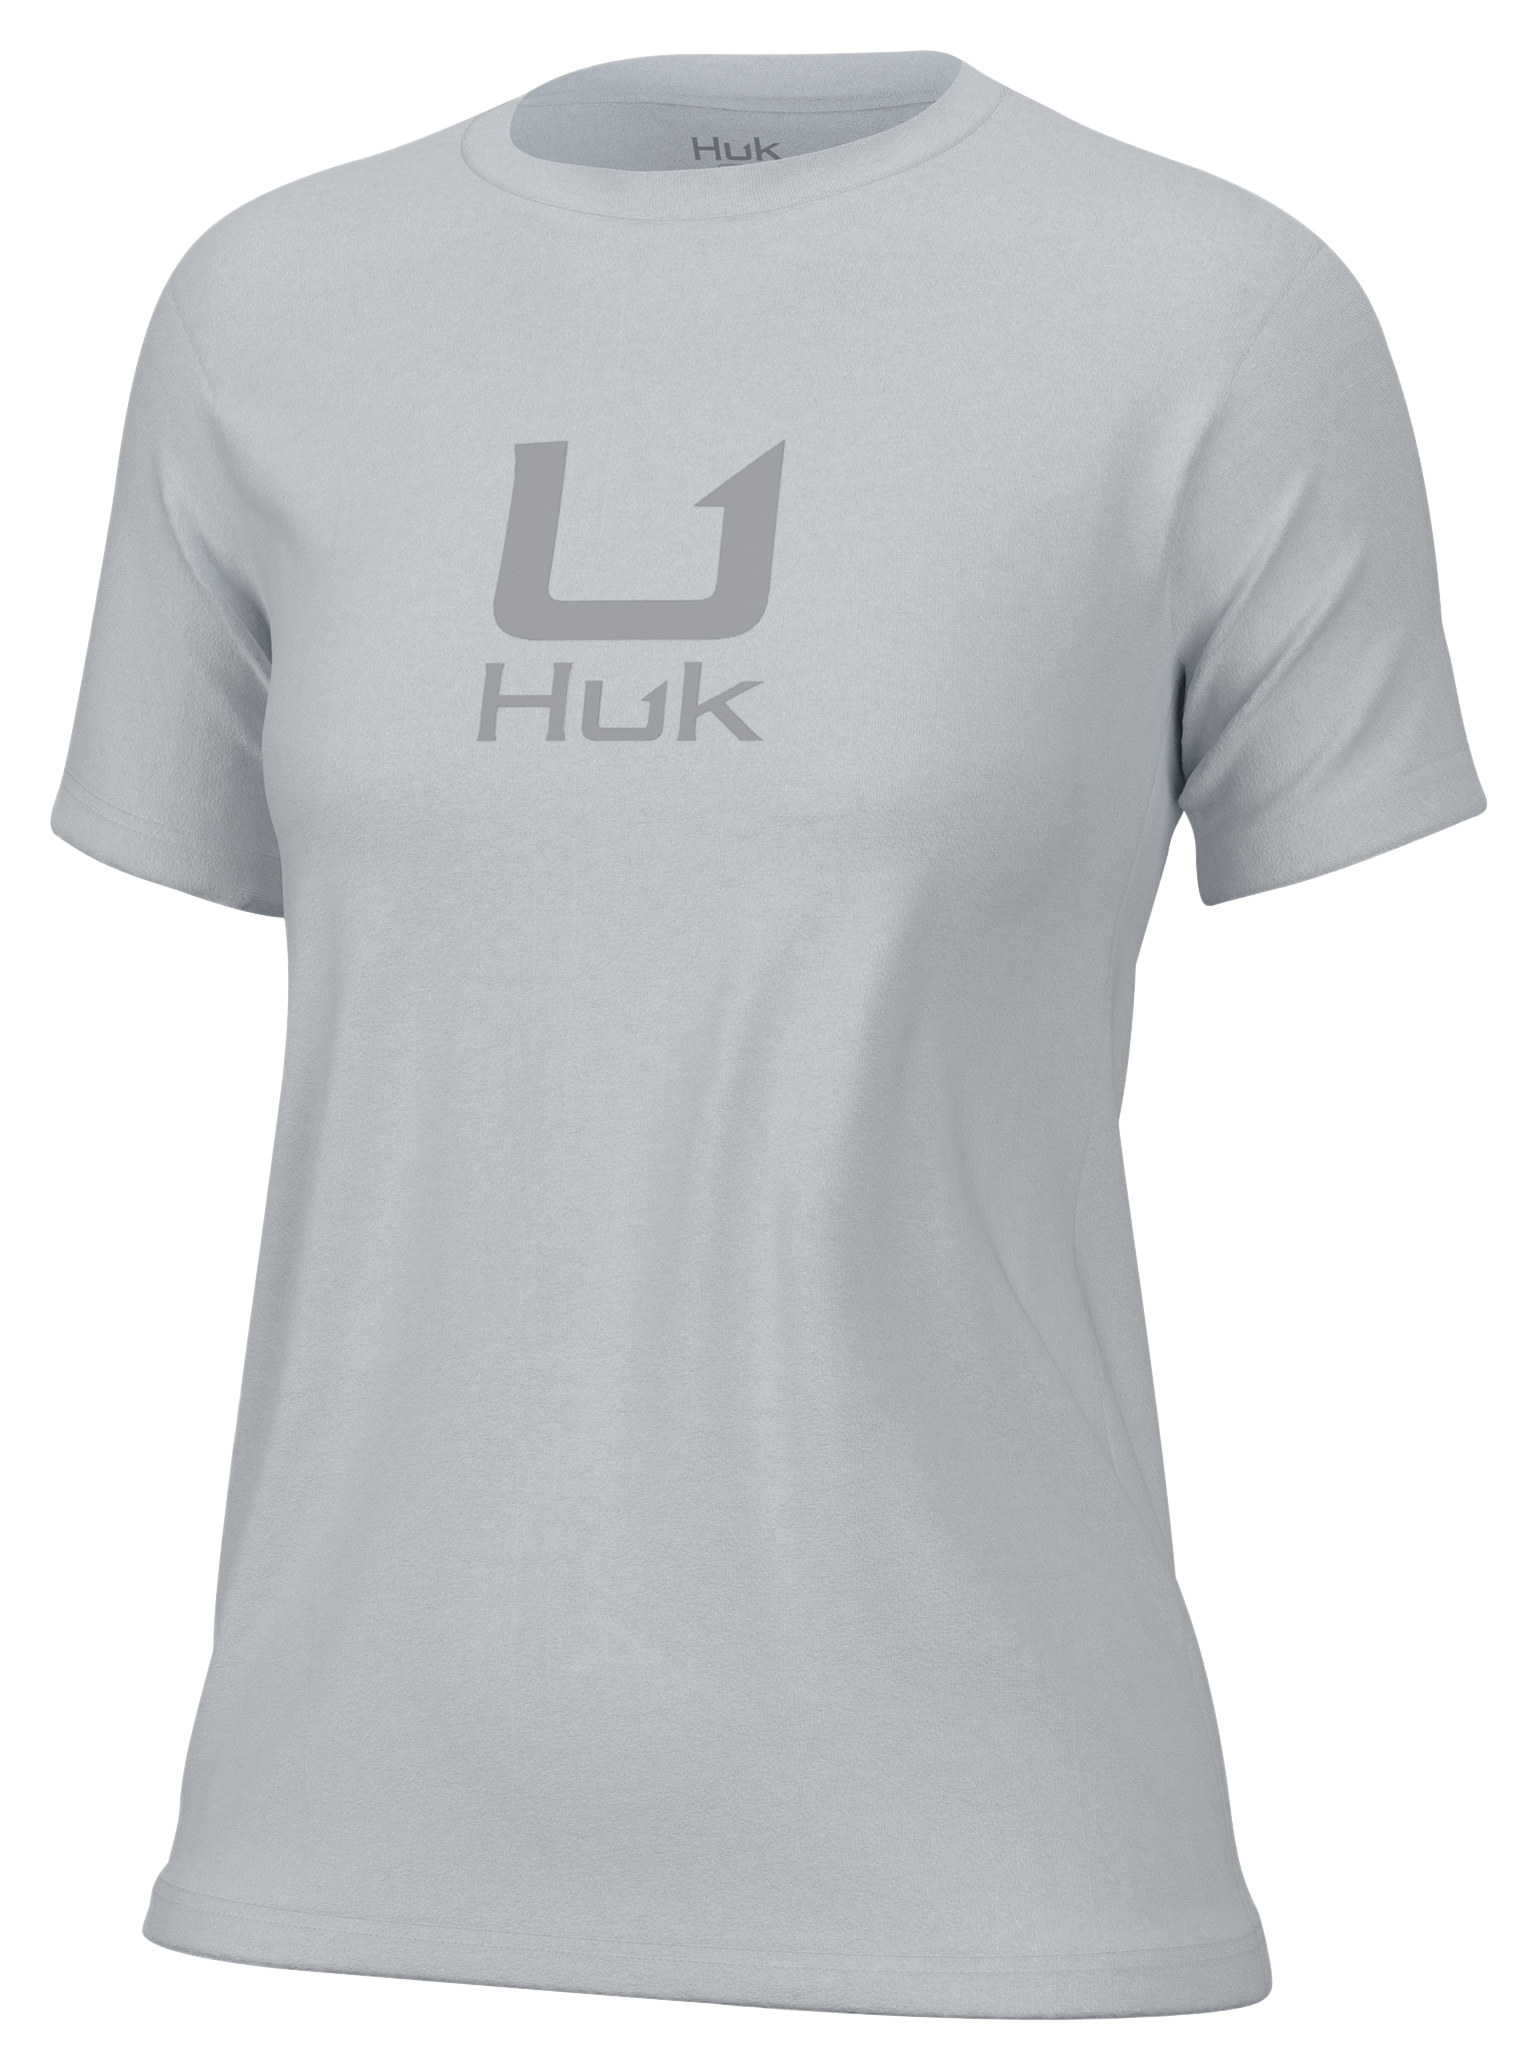 Huk Women's Performance Fishing Logo Tee, Short Sleeve T-Shirt